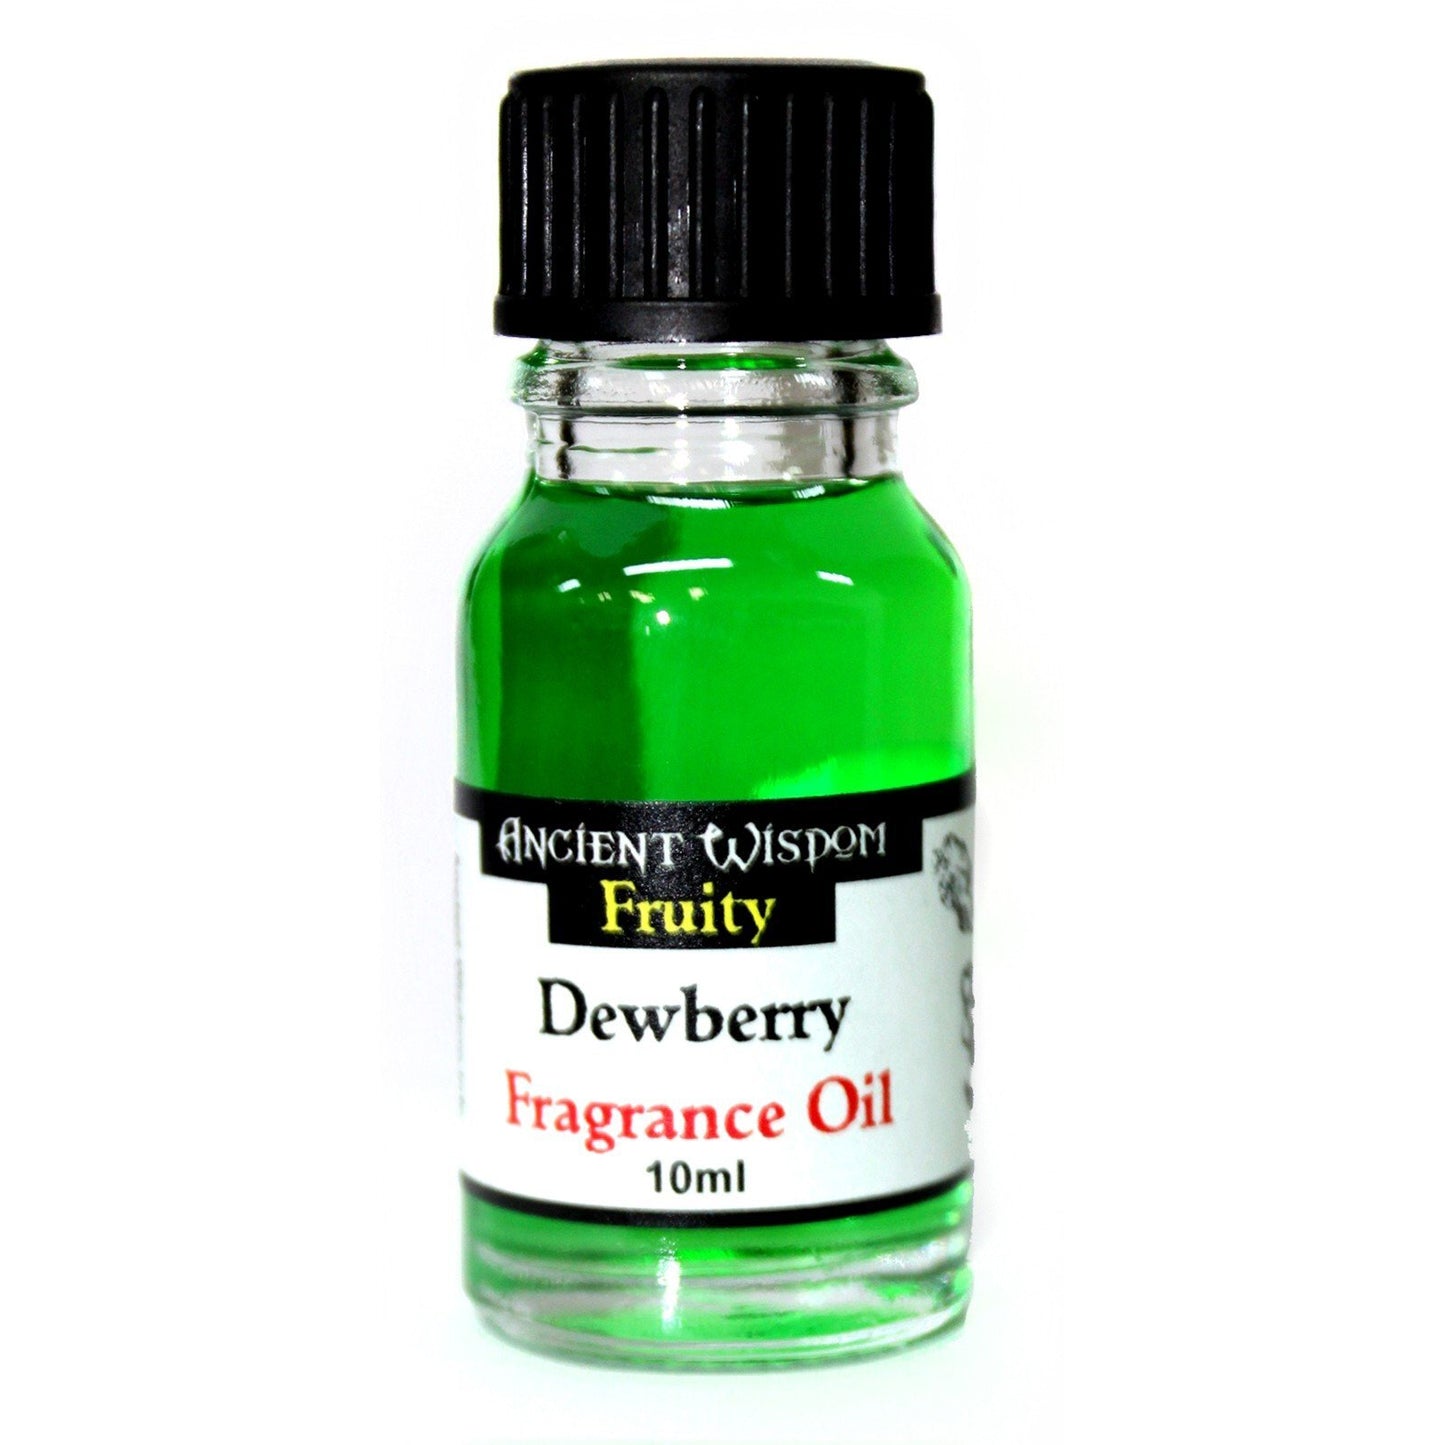 Dewberry Fragrance Oil